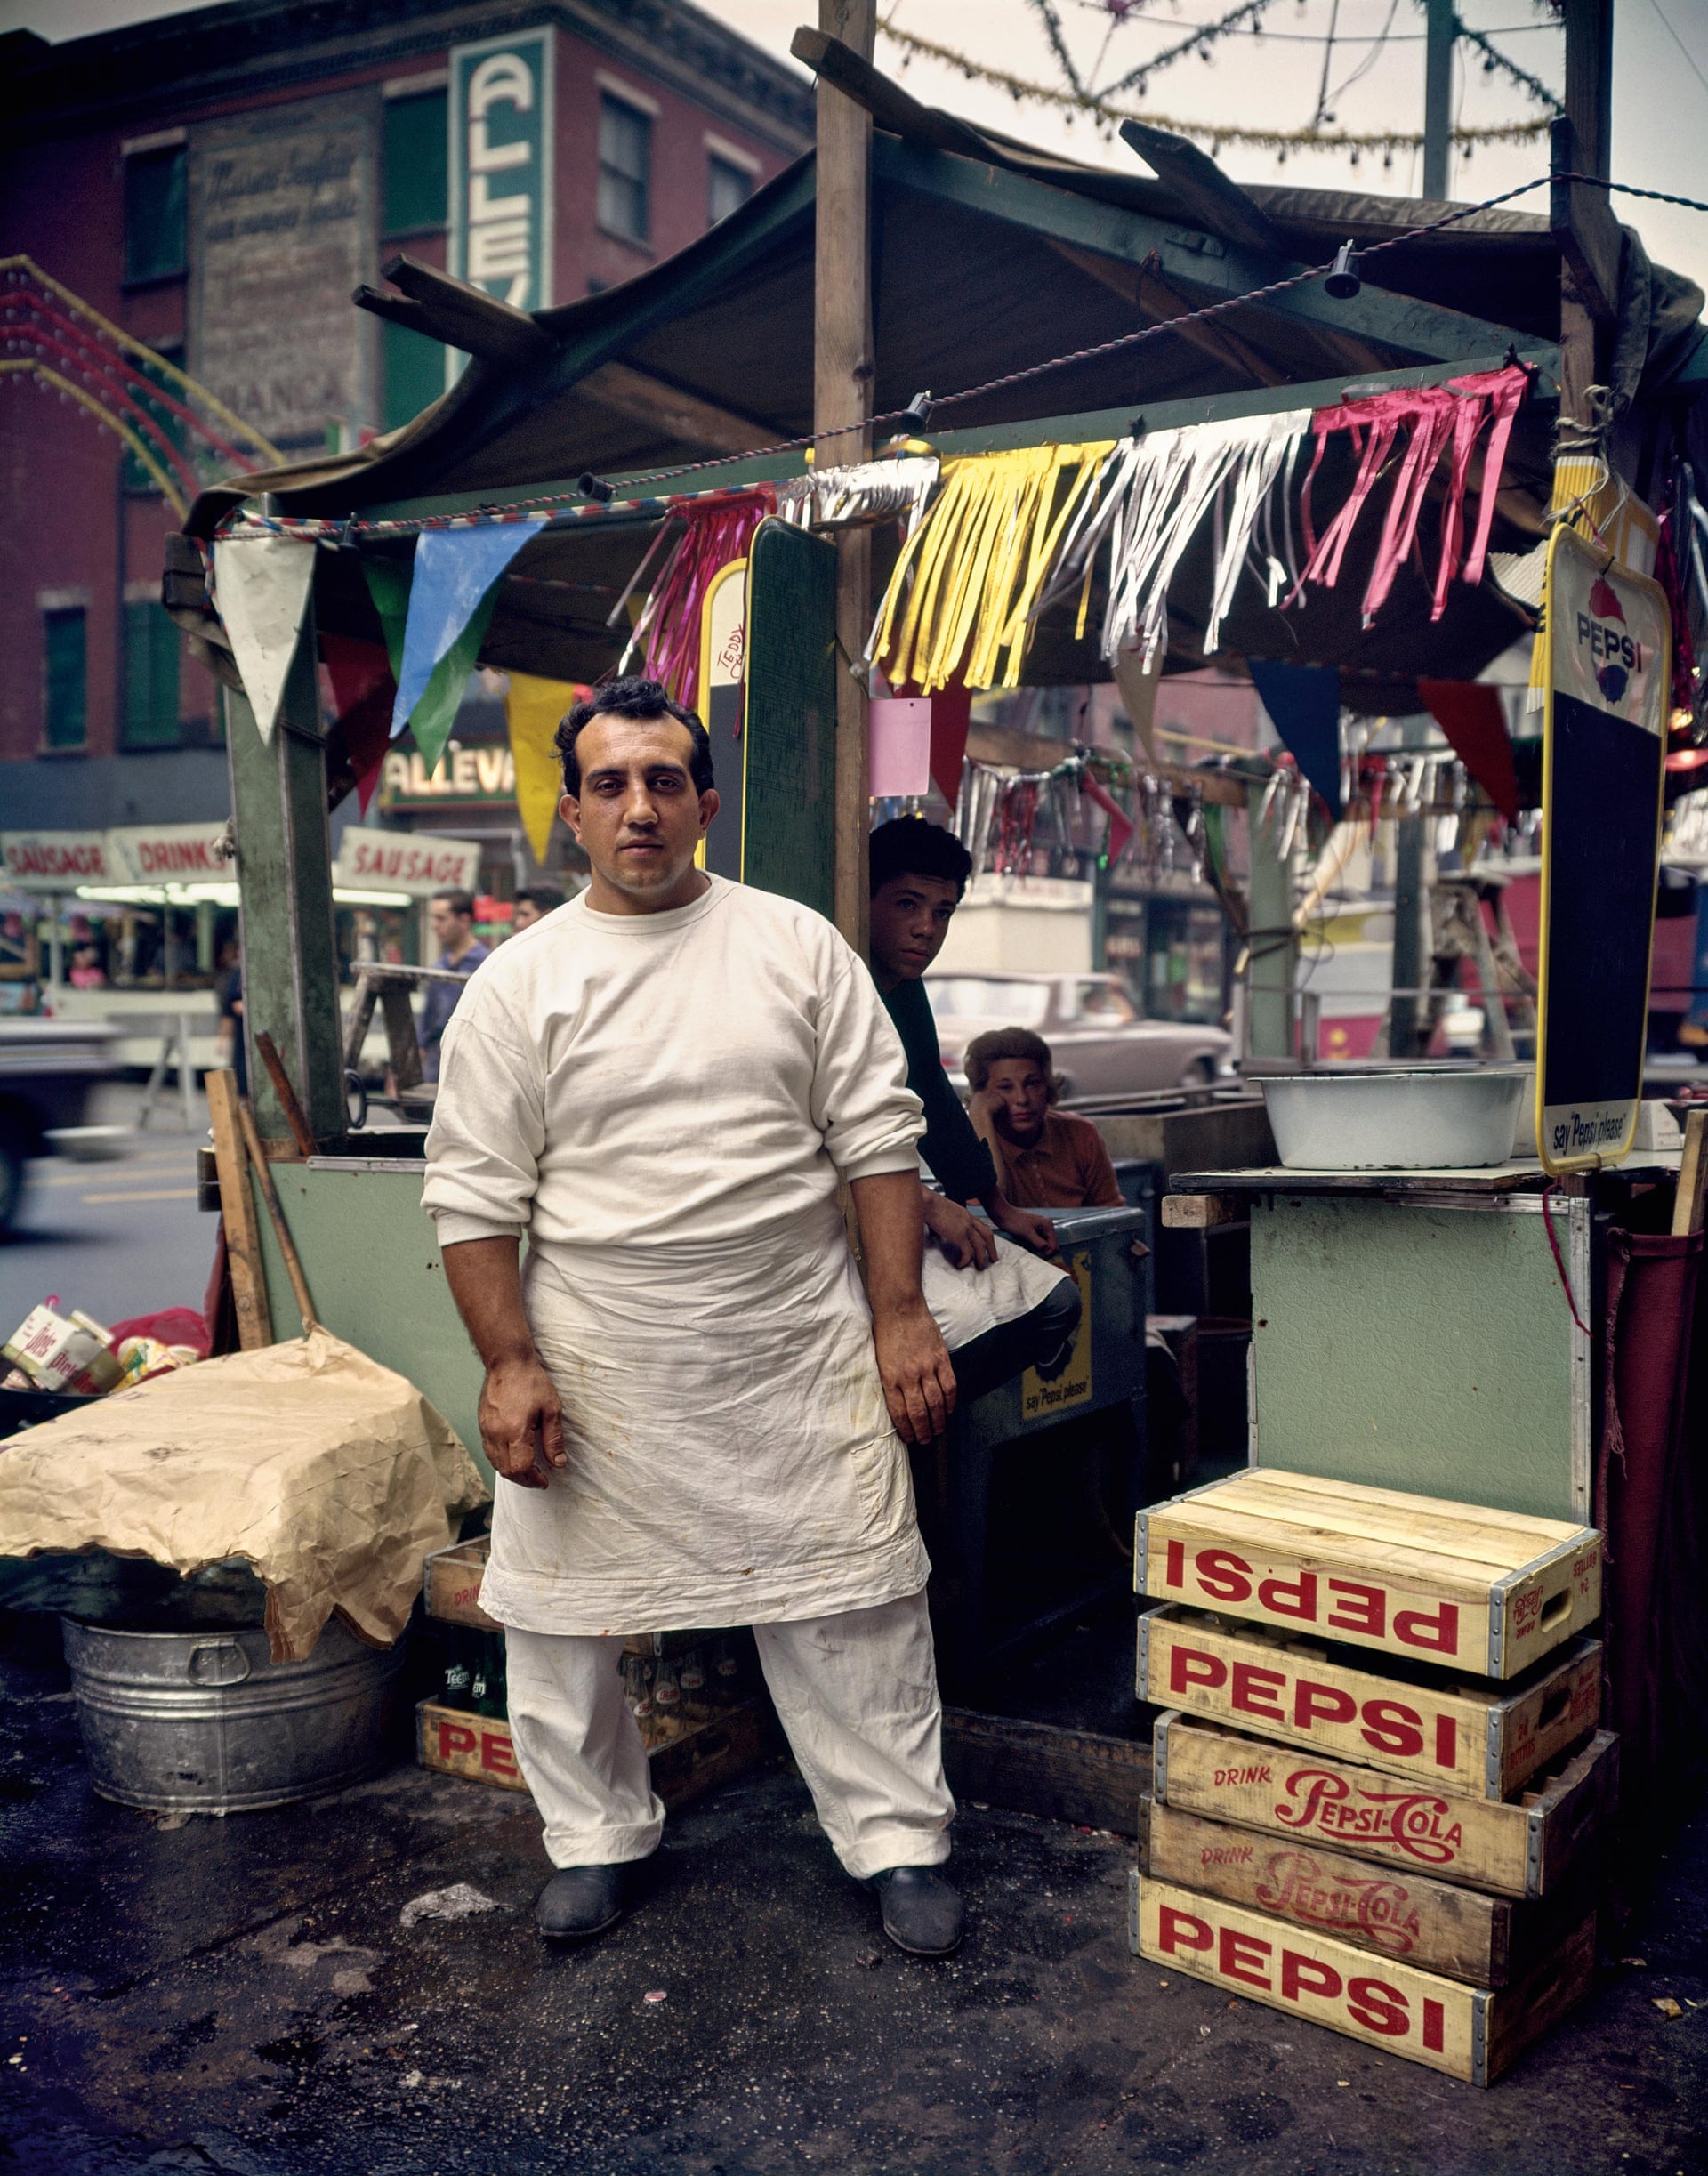 Hotdog stand, 1963, New York